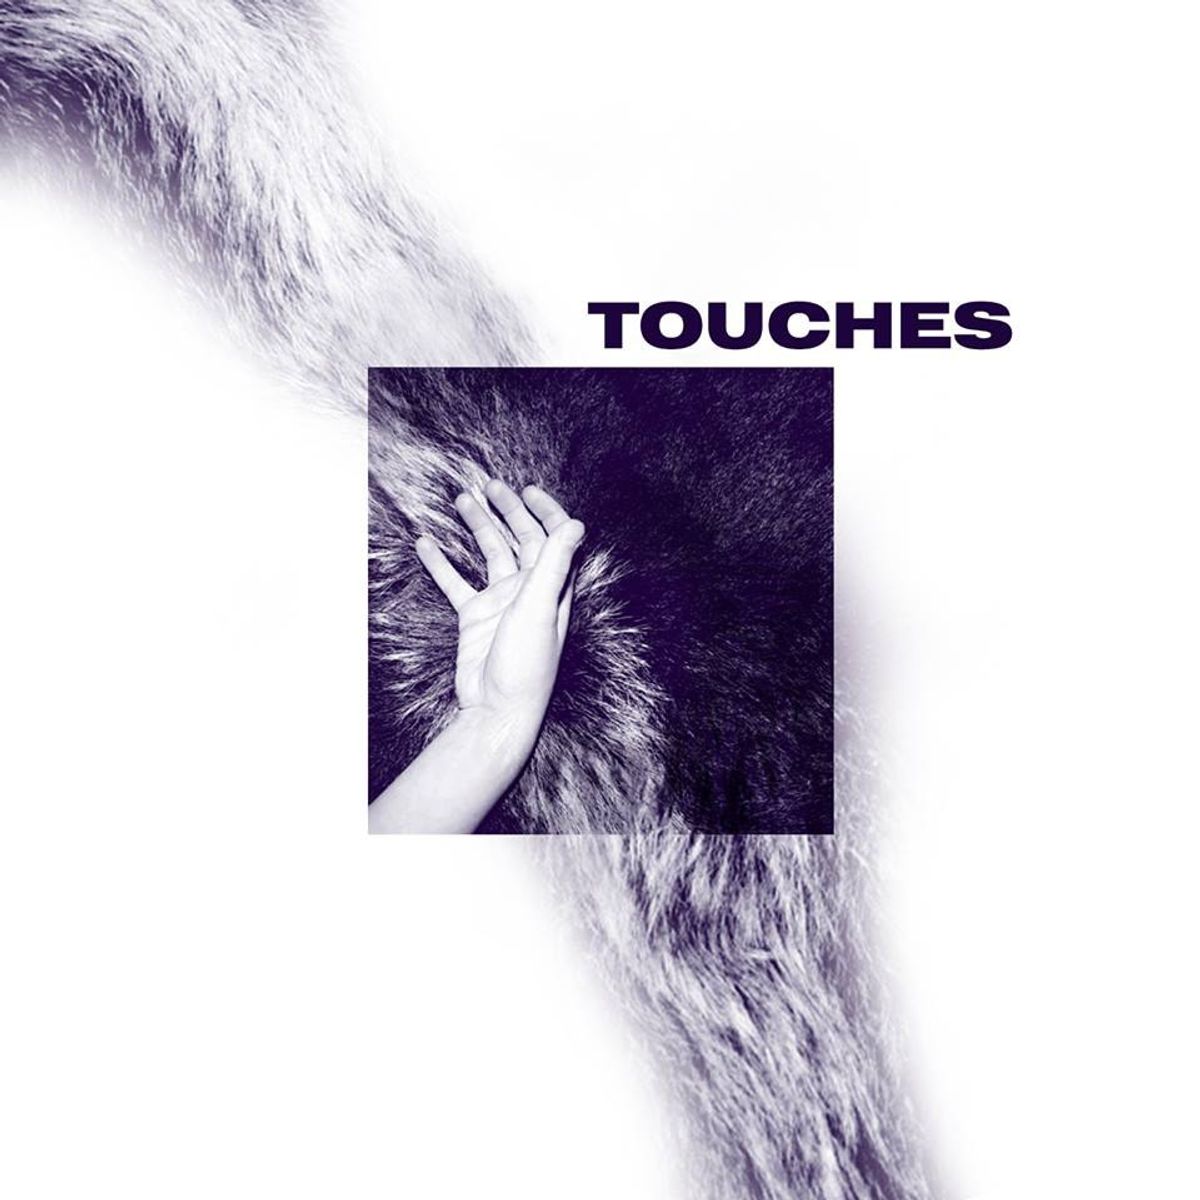 Twenty Wax Records Announce Touches